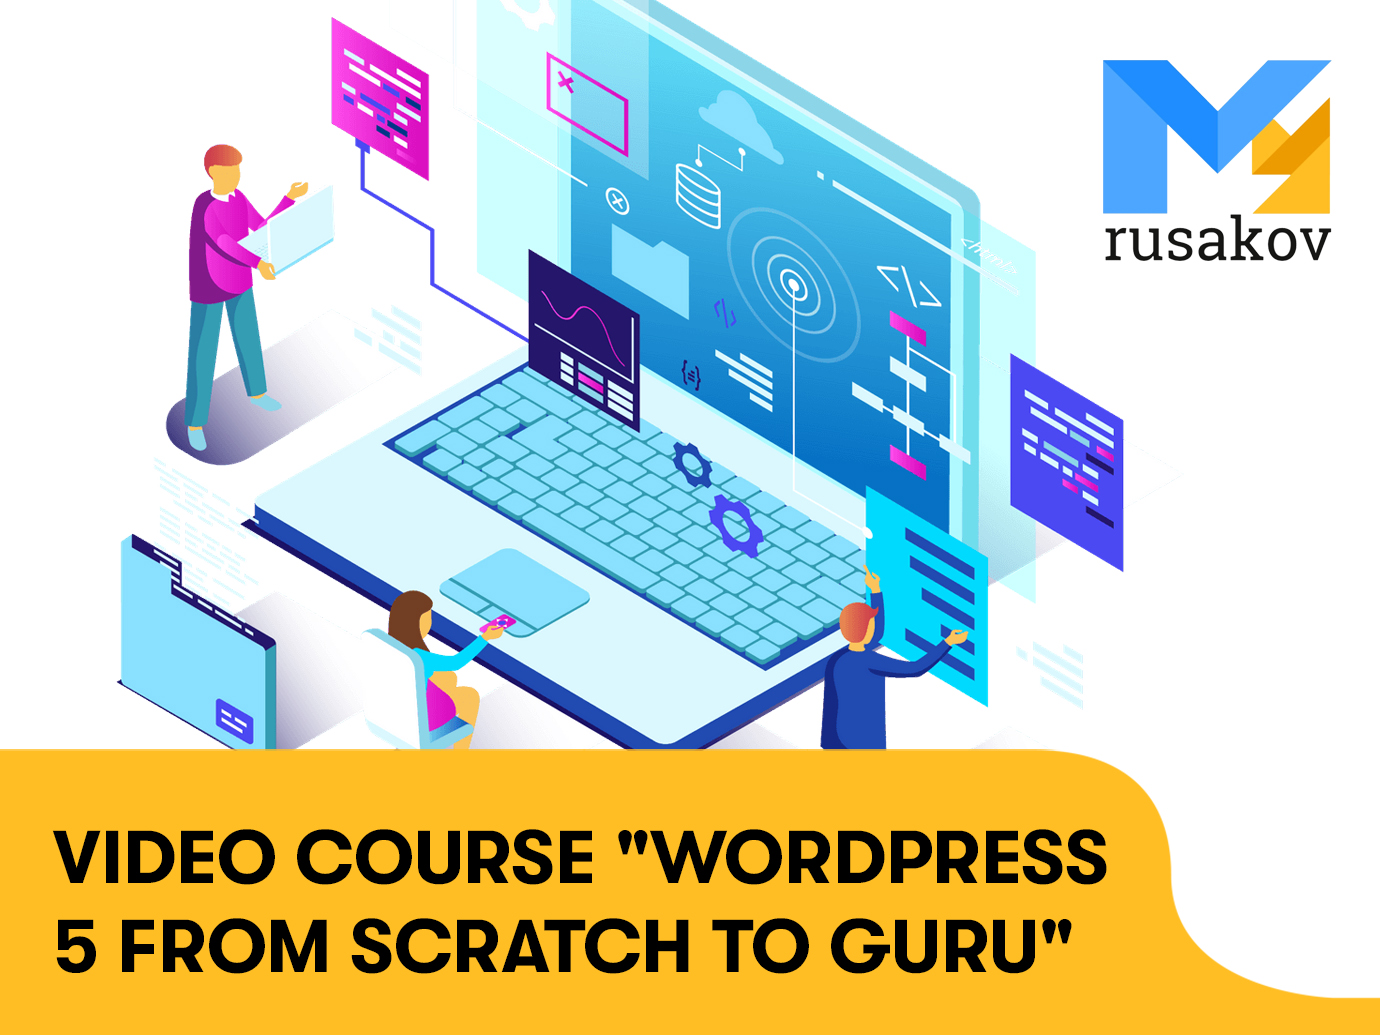 Video course “WordPress 5 from Scratch to Guru“